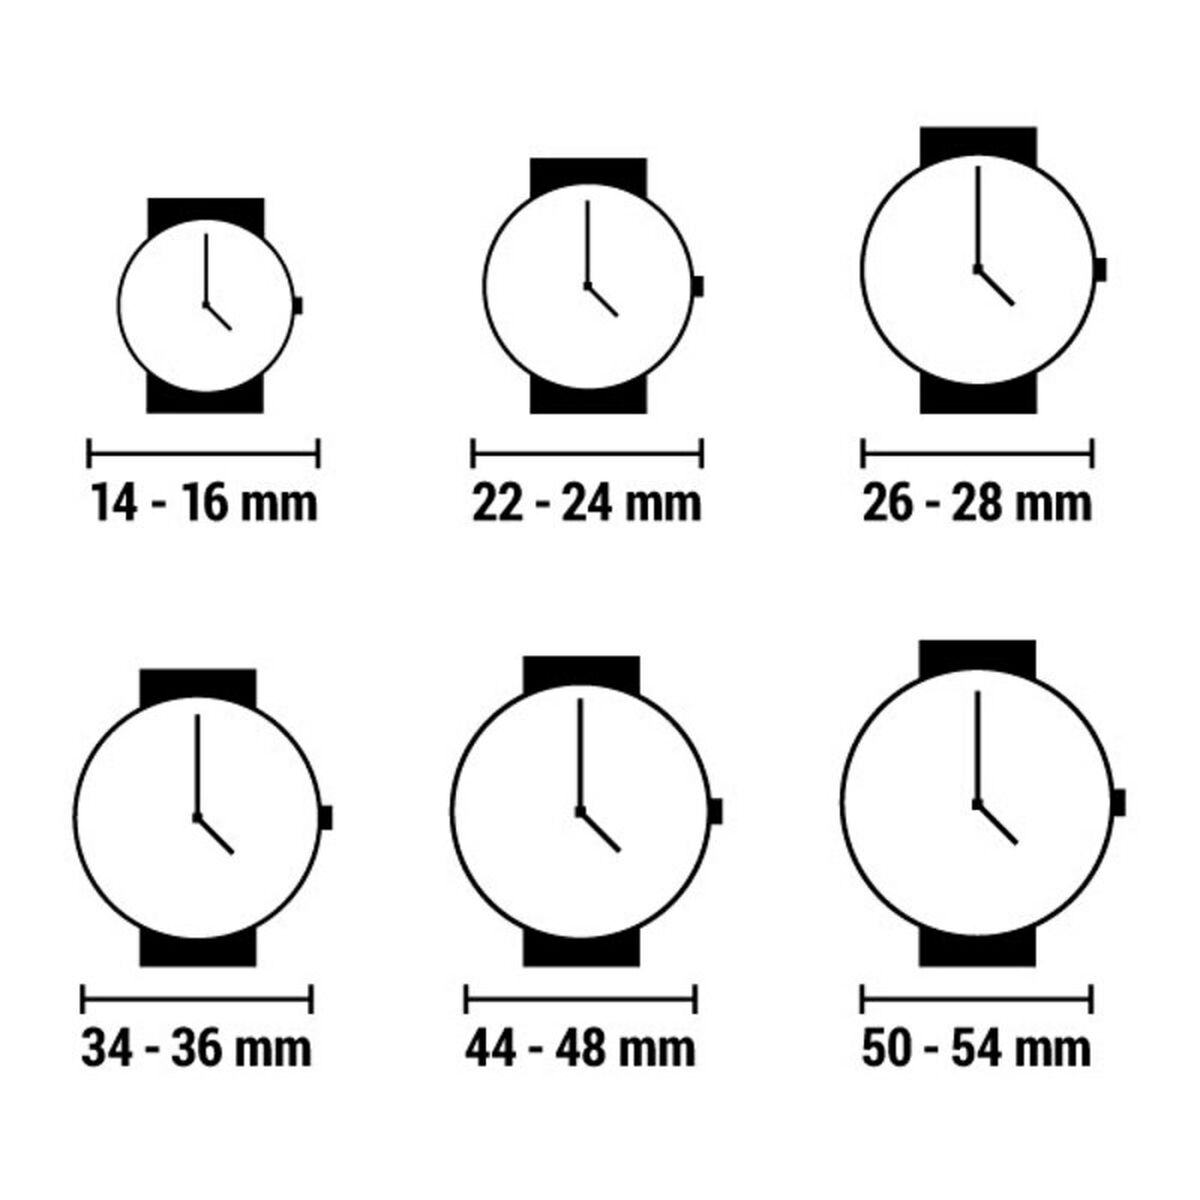 Horloge Heren Strumento Marino SM129S-TT-BN-BL (Ø 46 mm)